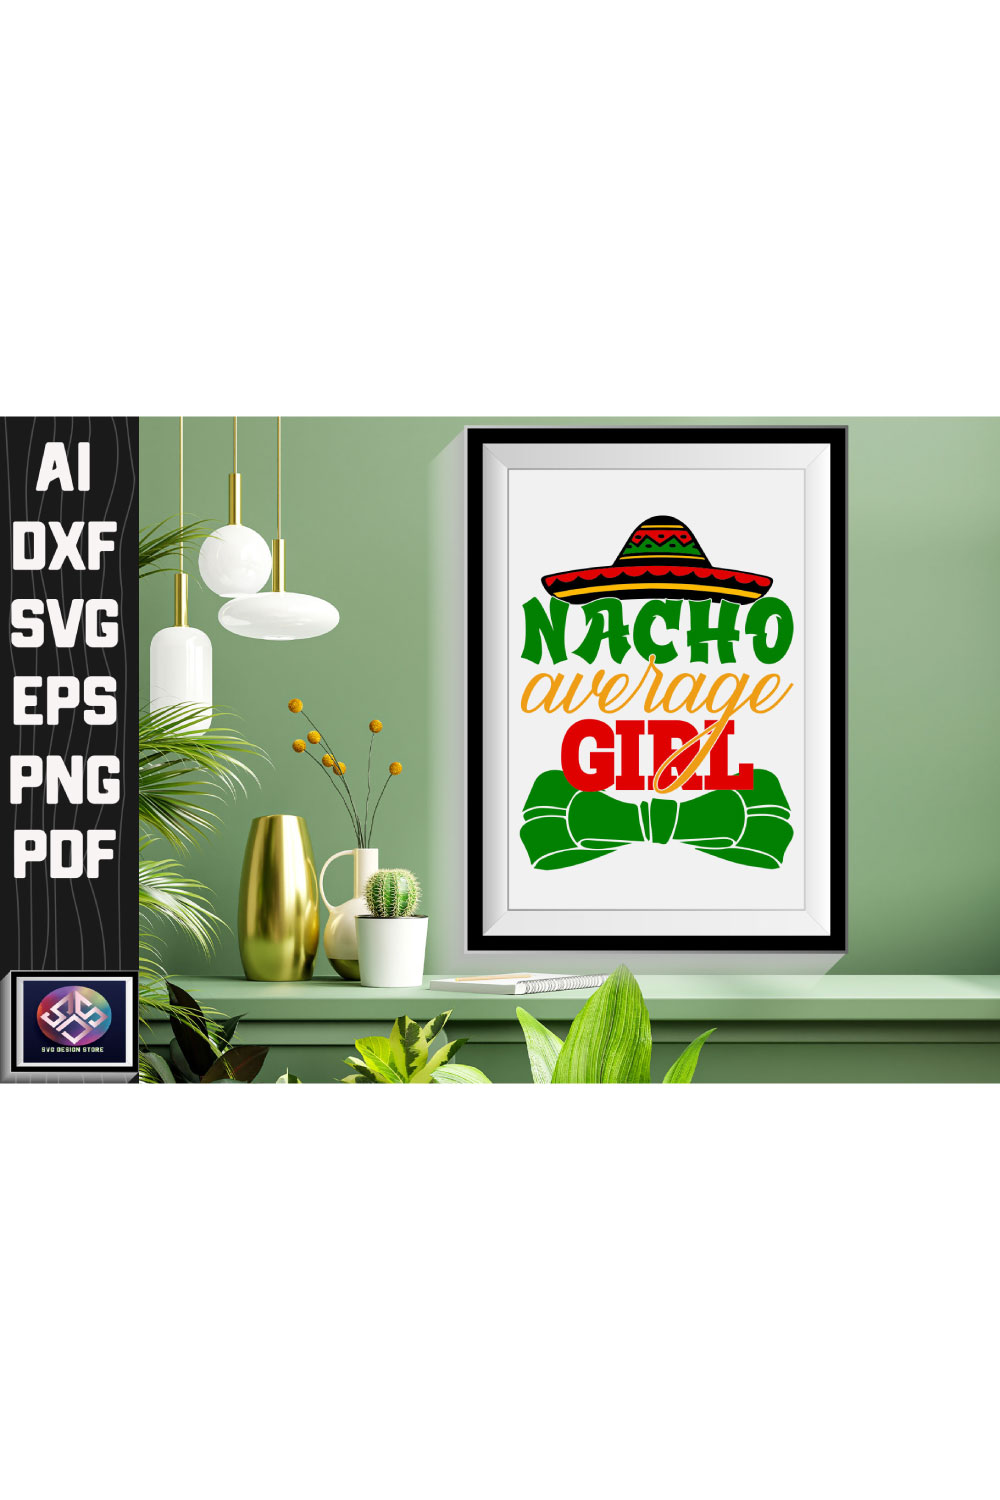 Nacho Average Girl pinterest preview image.